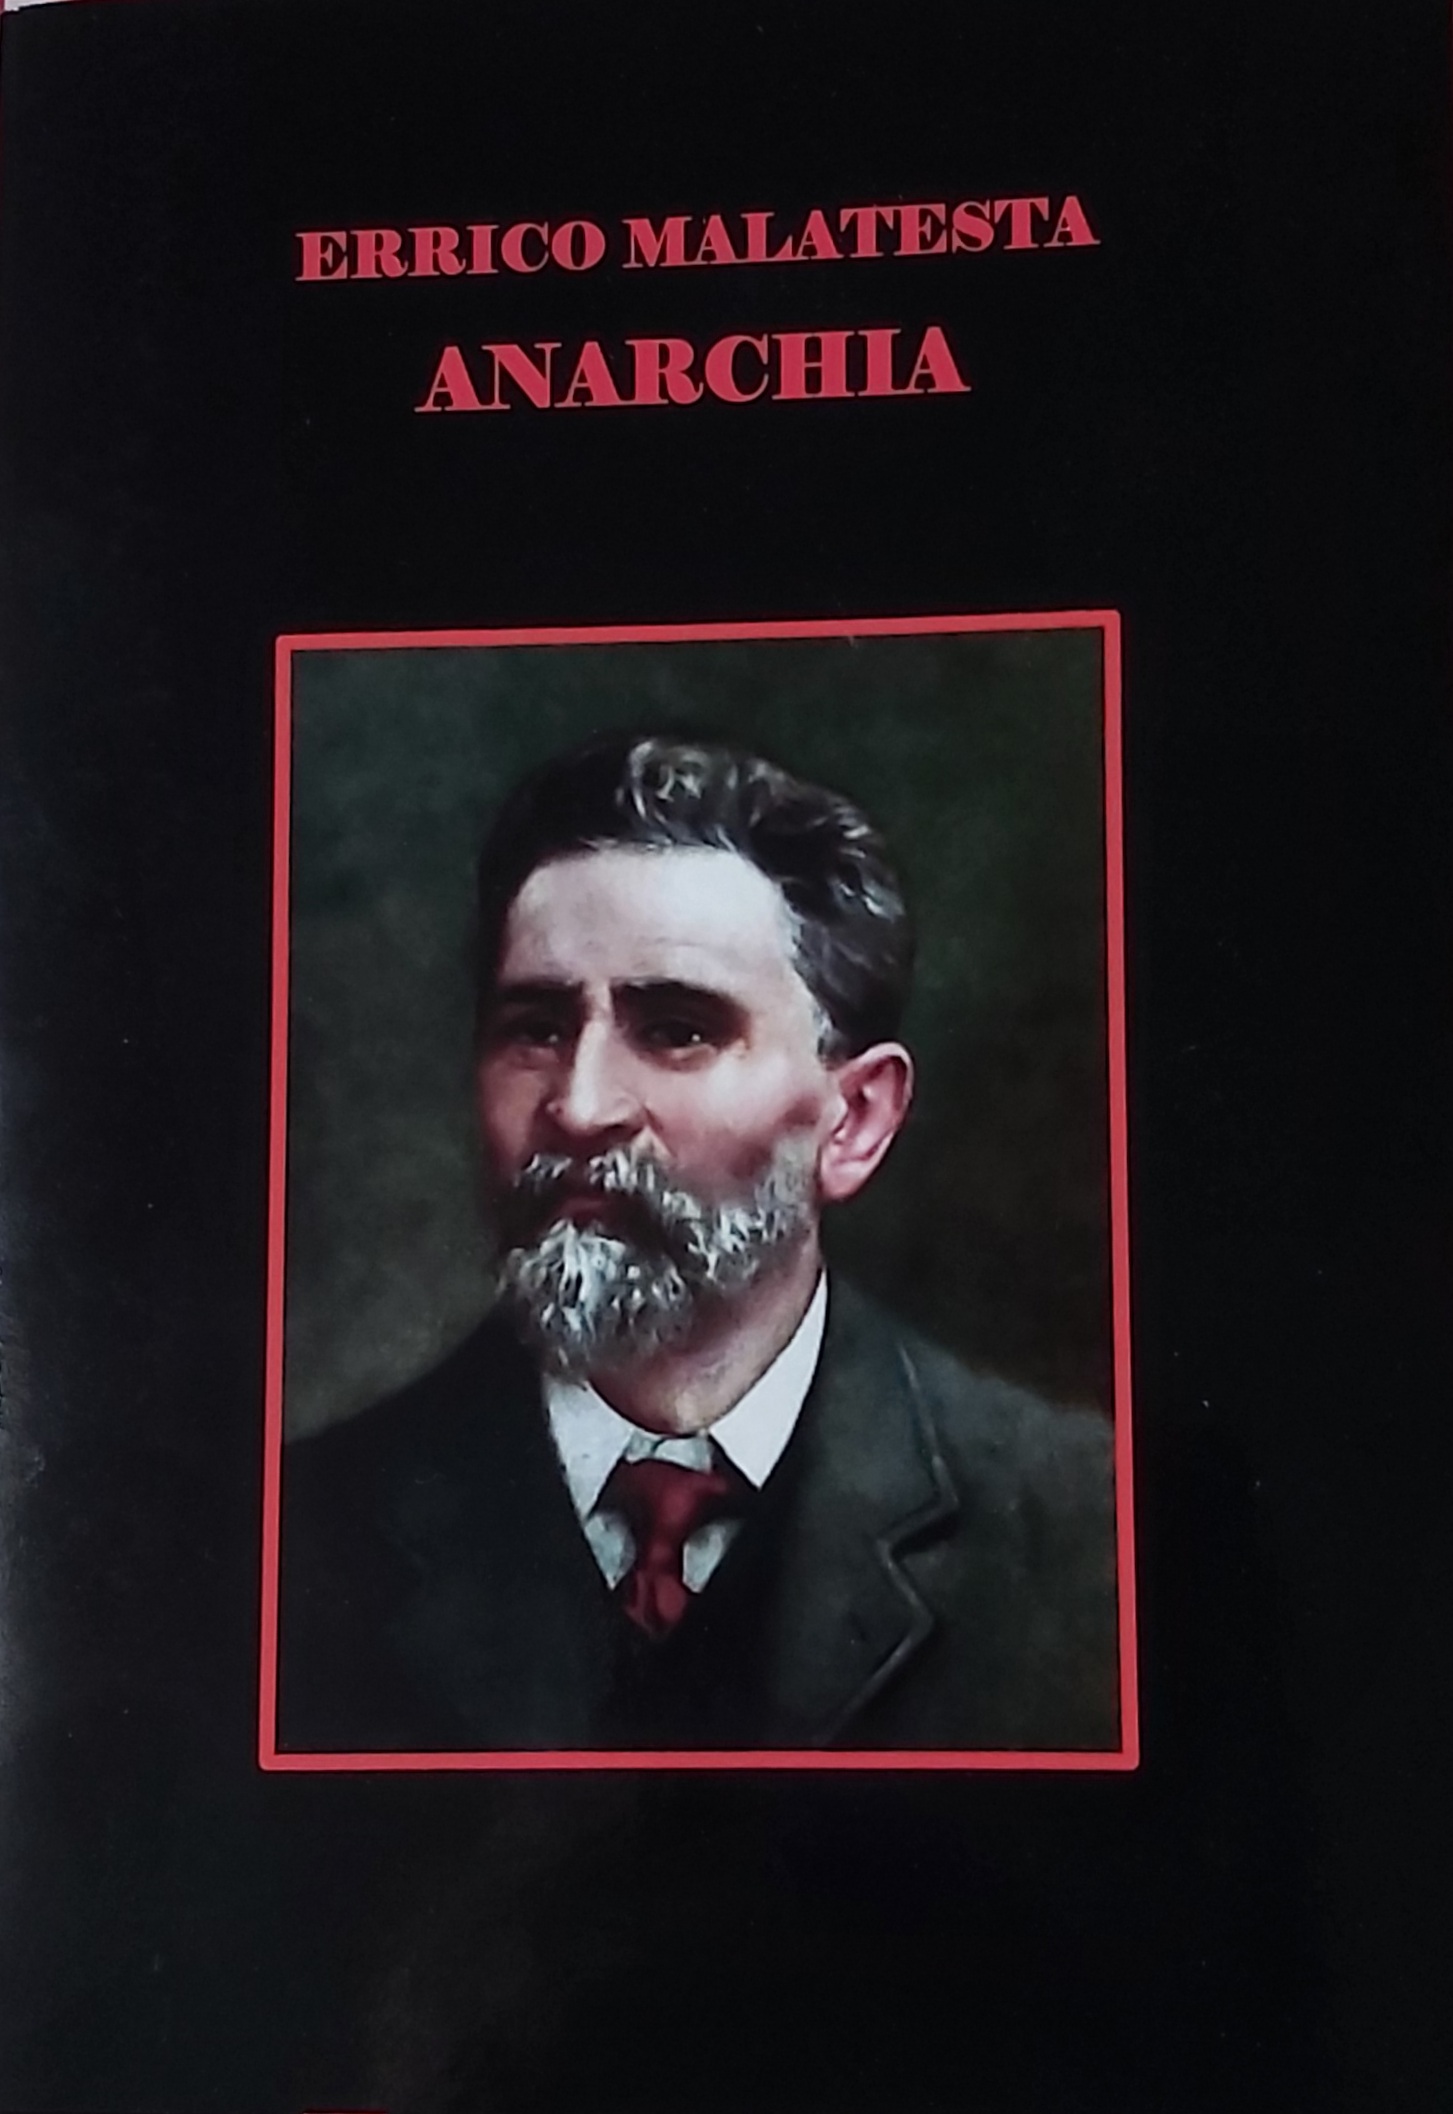 Errico Malatesta "Anarchia"